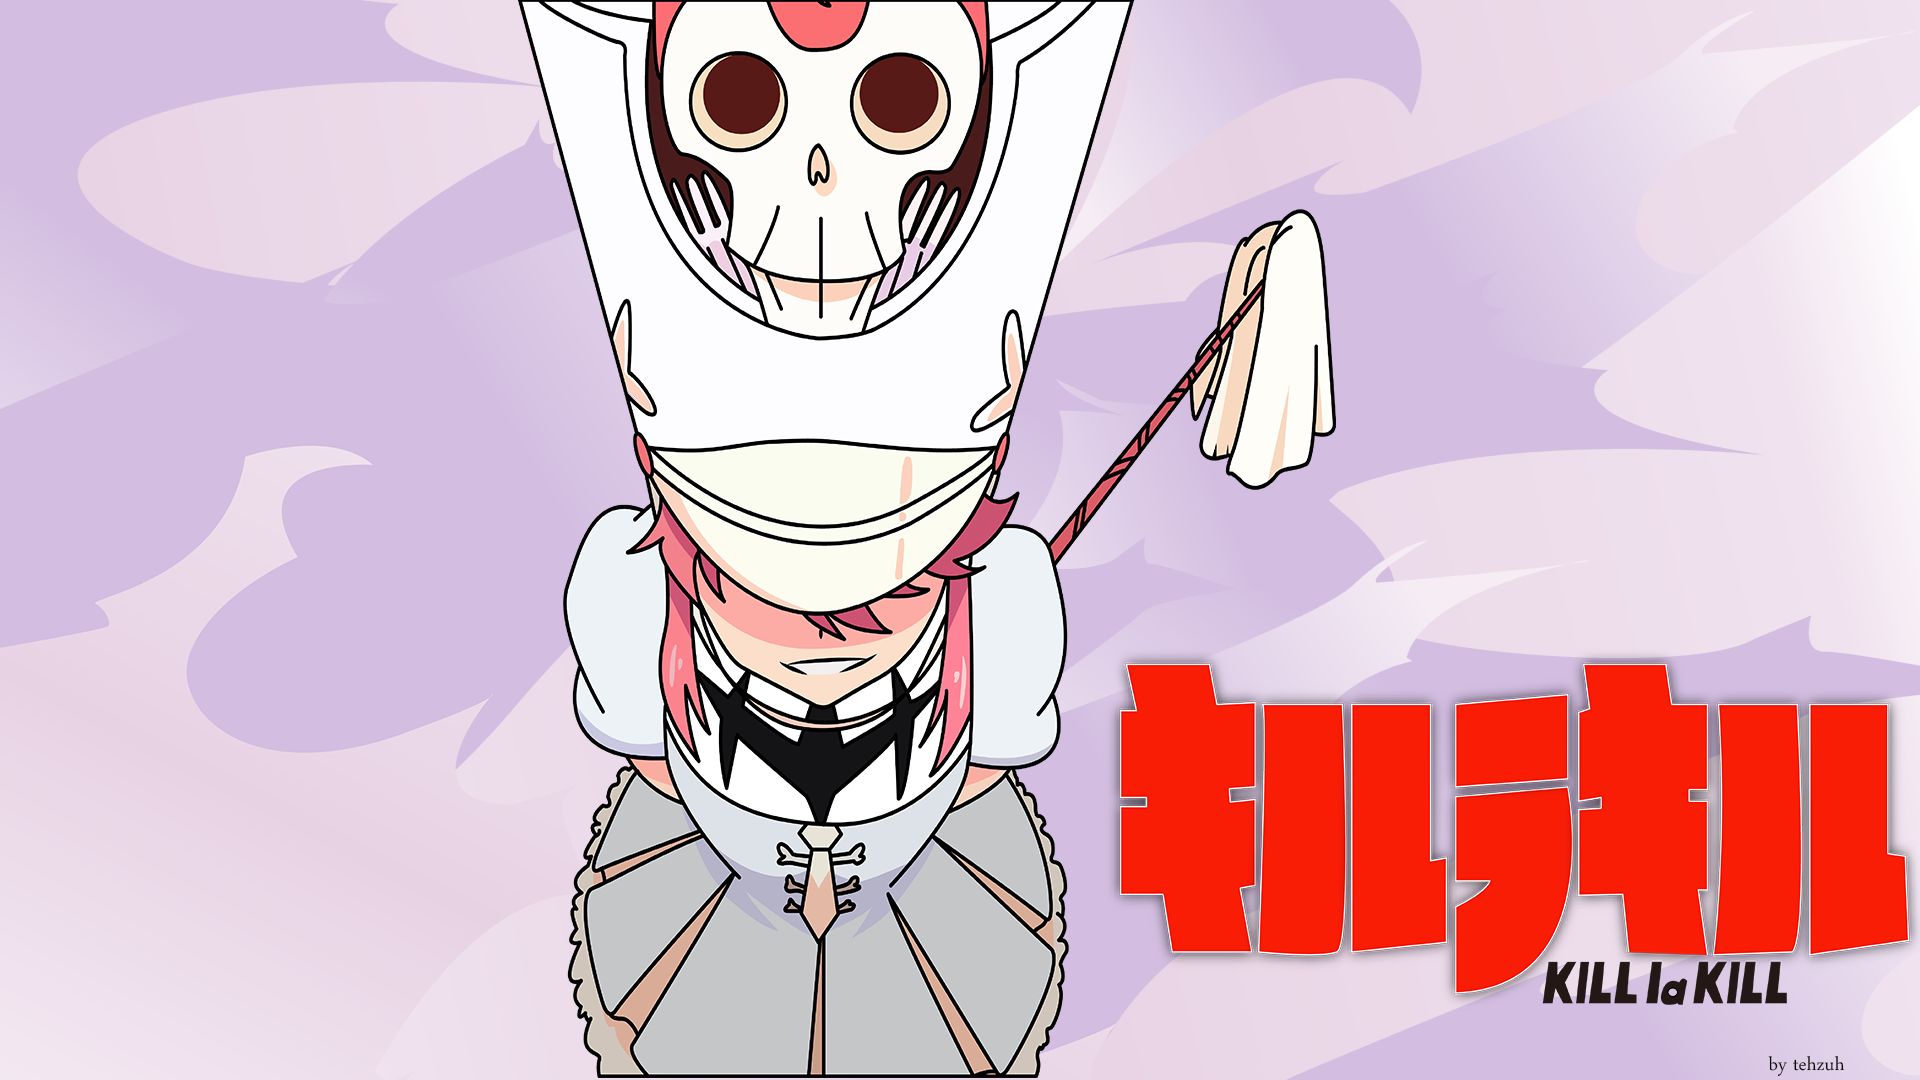 850047 Bild herunterladen animes, kiru ra kiru: kill la kill, nonon jakuzure - Hintergrundbilder und Bildschirmschoner kostenlos